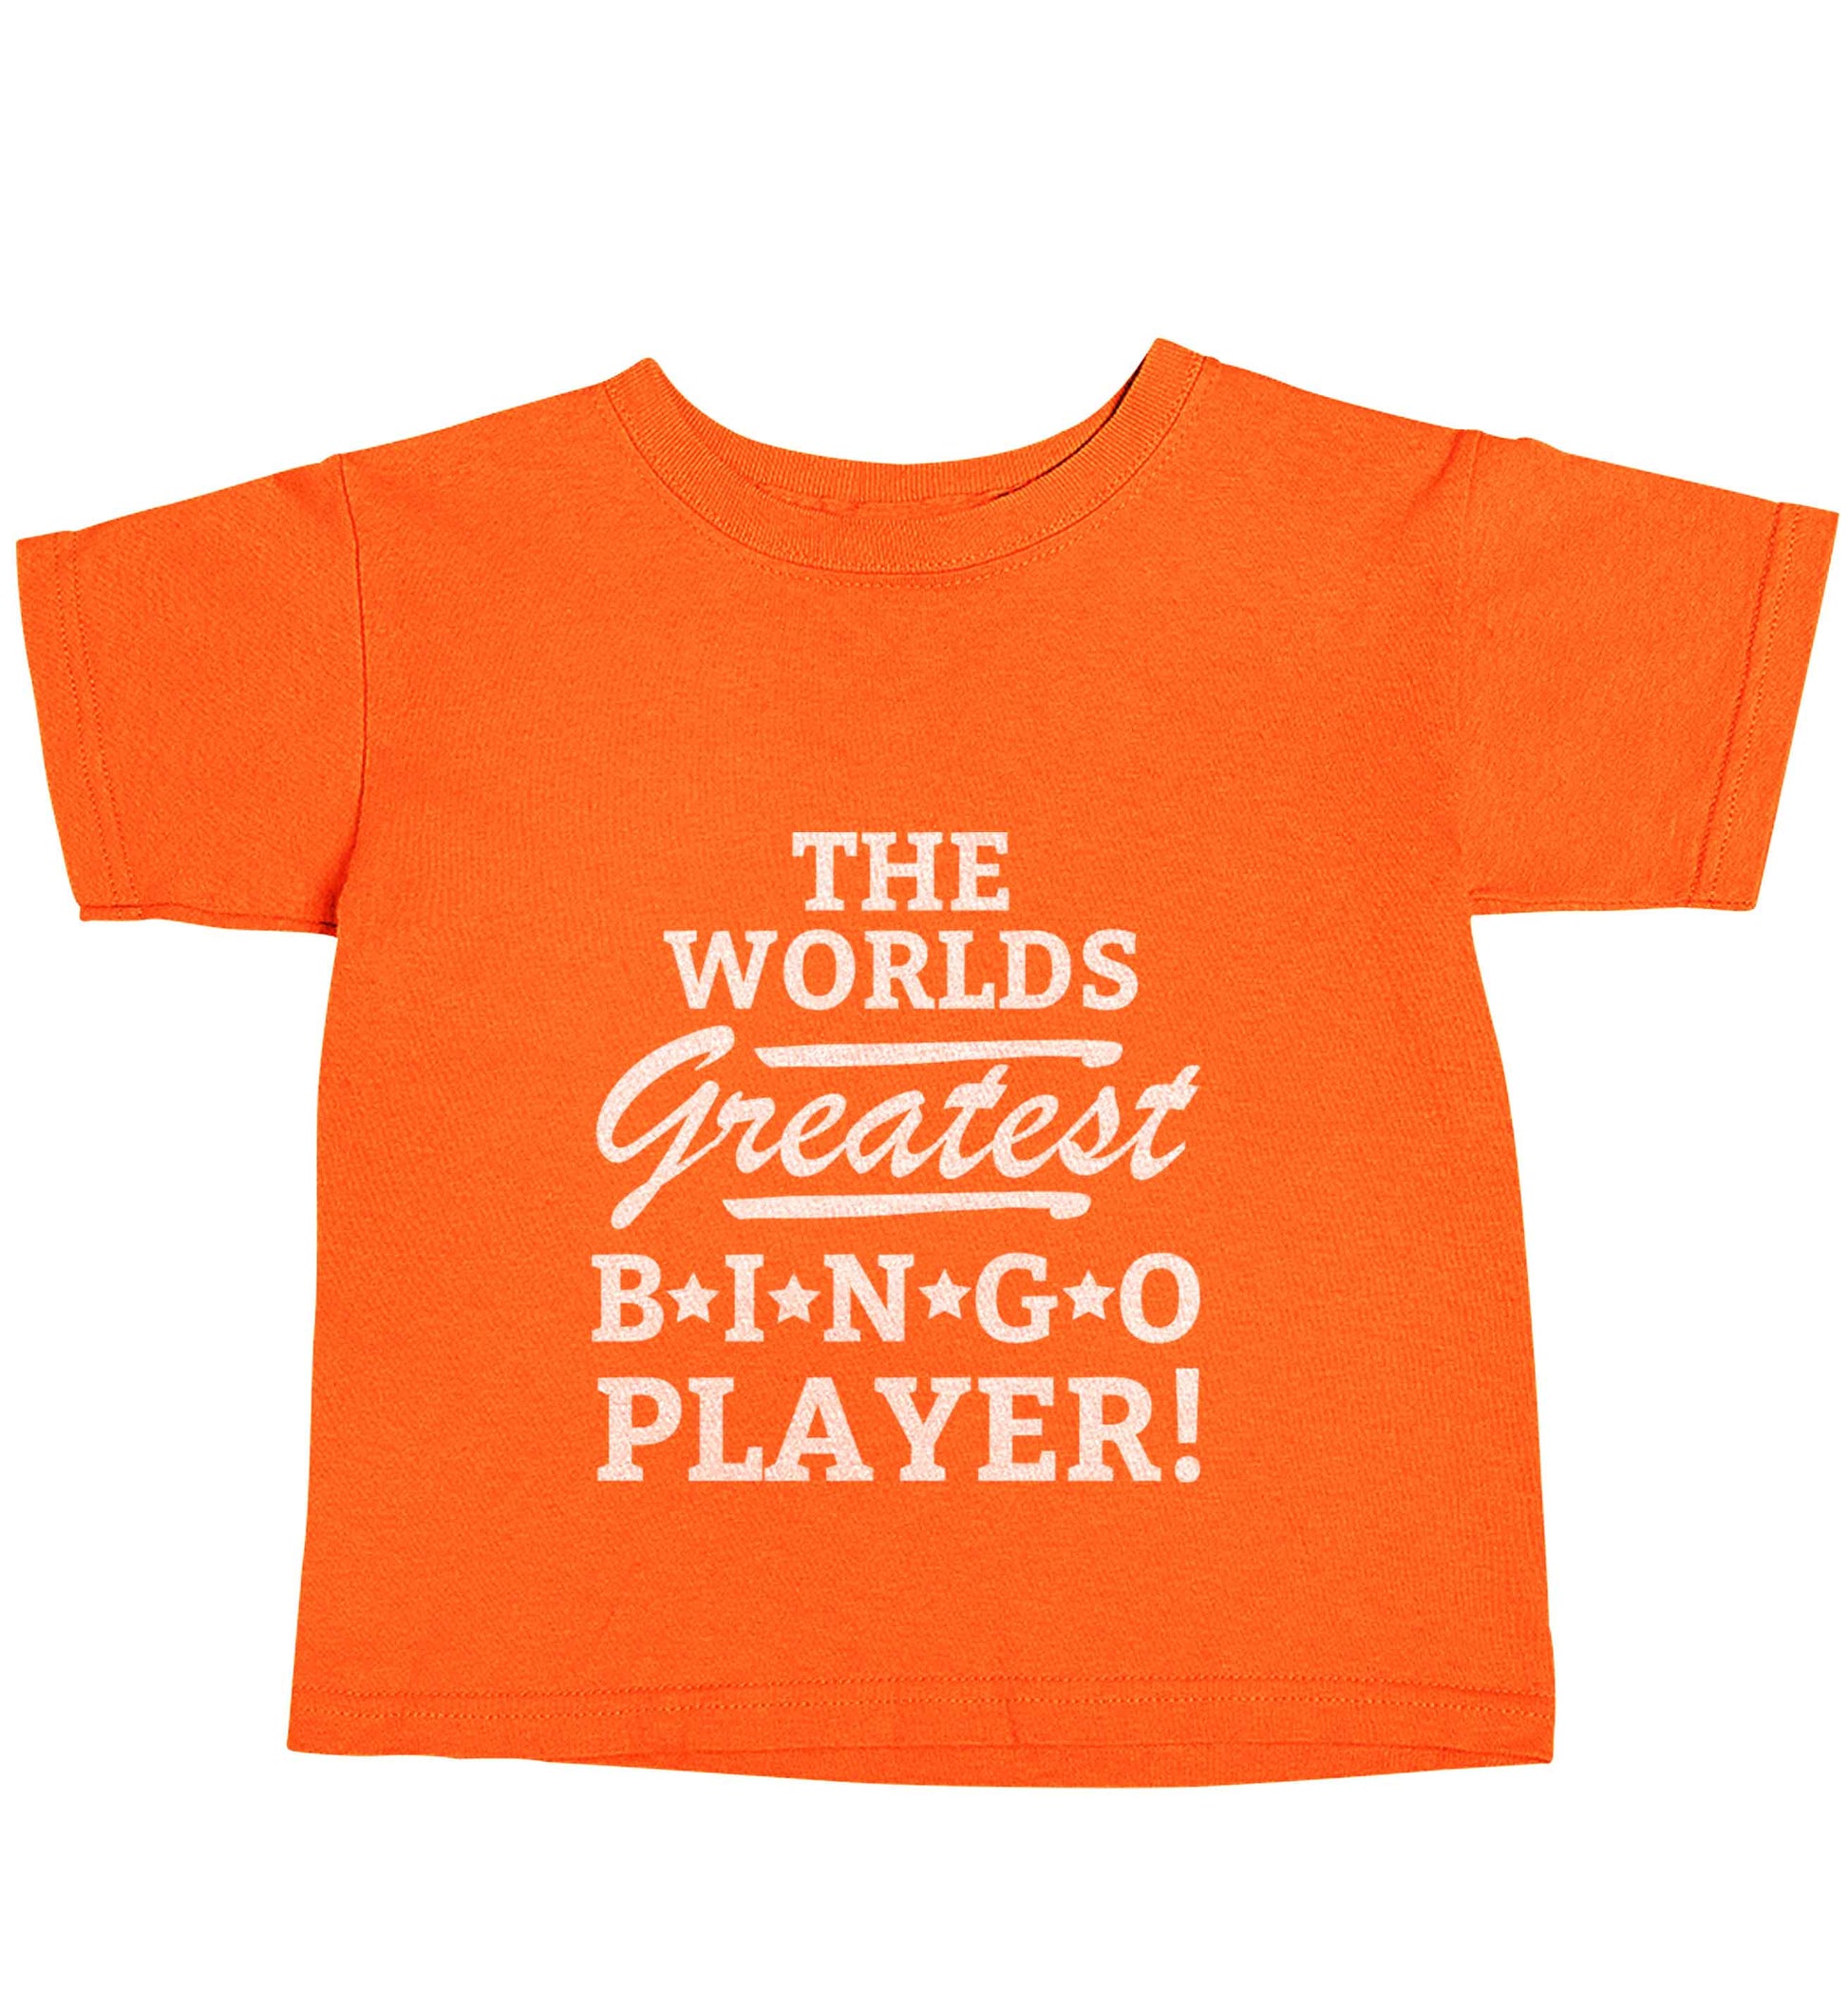 Worlds greatest bingo player orange baby toddler Tshirt 2 Years